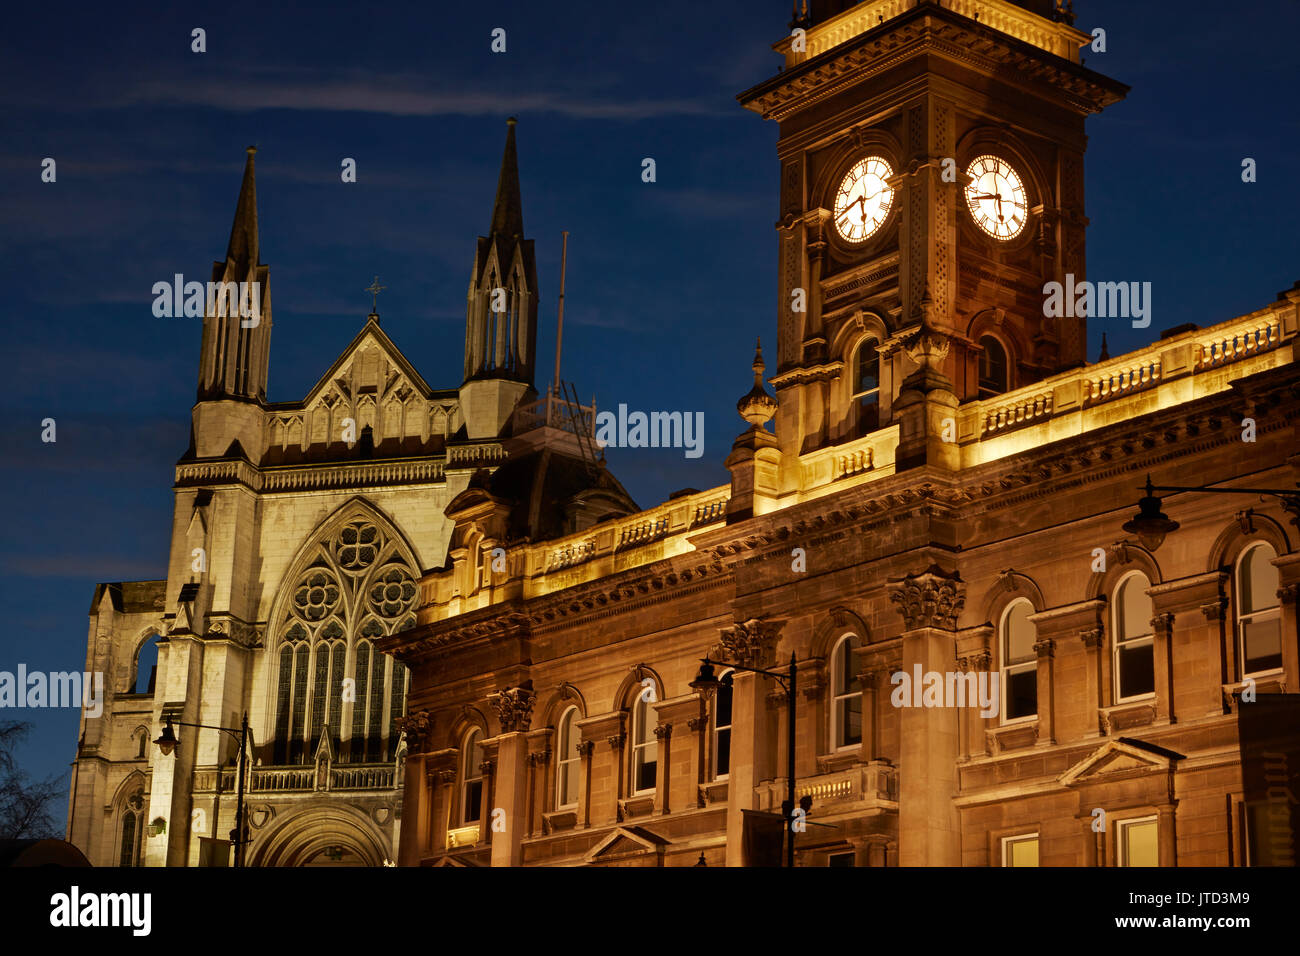 St Paul's Cathedral and Municipal Chambers at night, Octagon, Dunedin, South Island, New Zealand Stock Photo